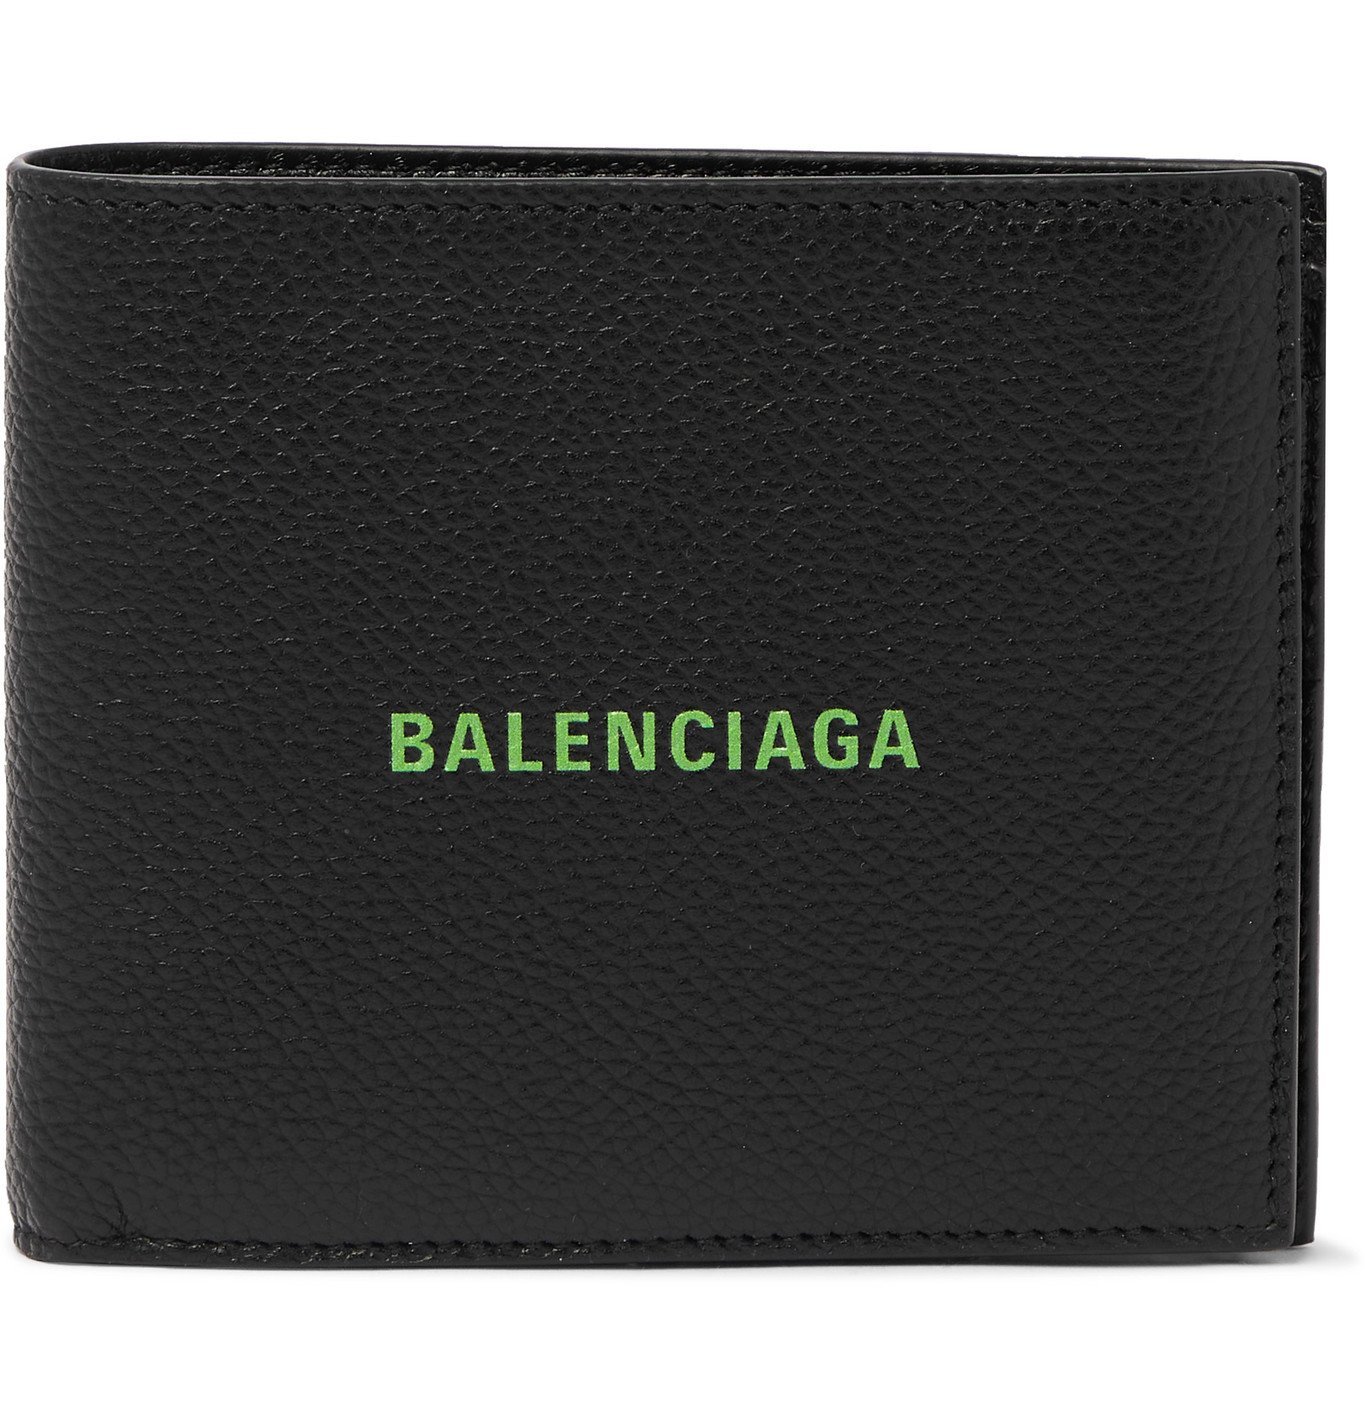 BALENCIAGA デムナ ヴァザリア ロゴ レザー型押し 二つ折り財布 黒値下げ交渉可能✨️